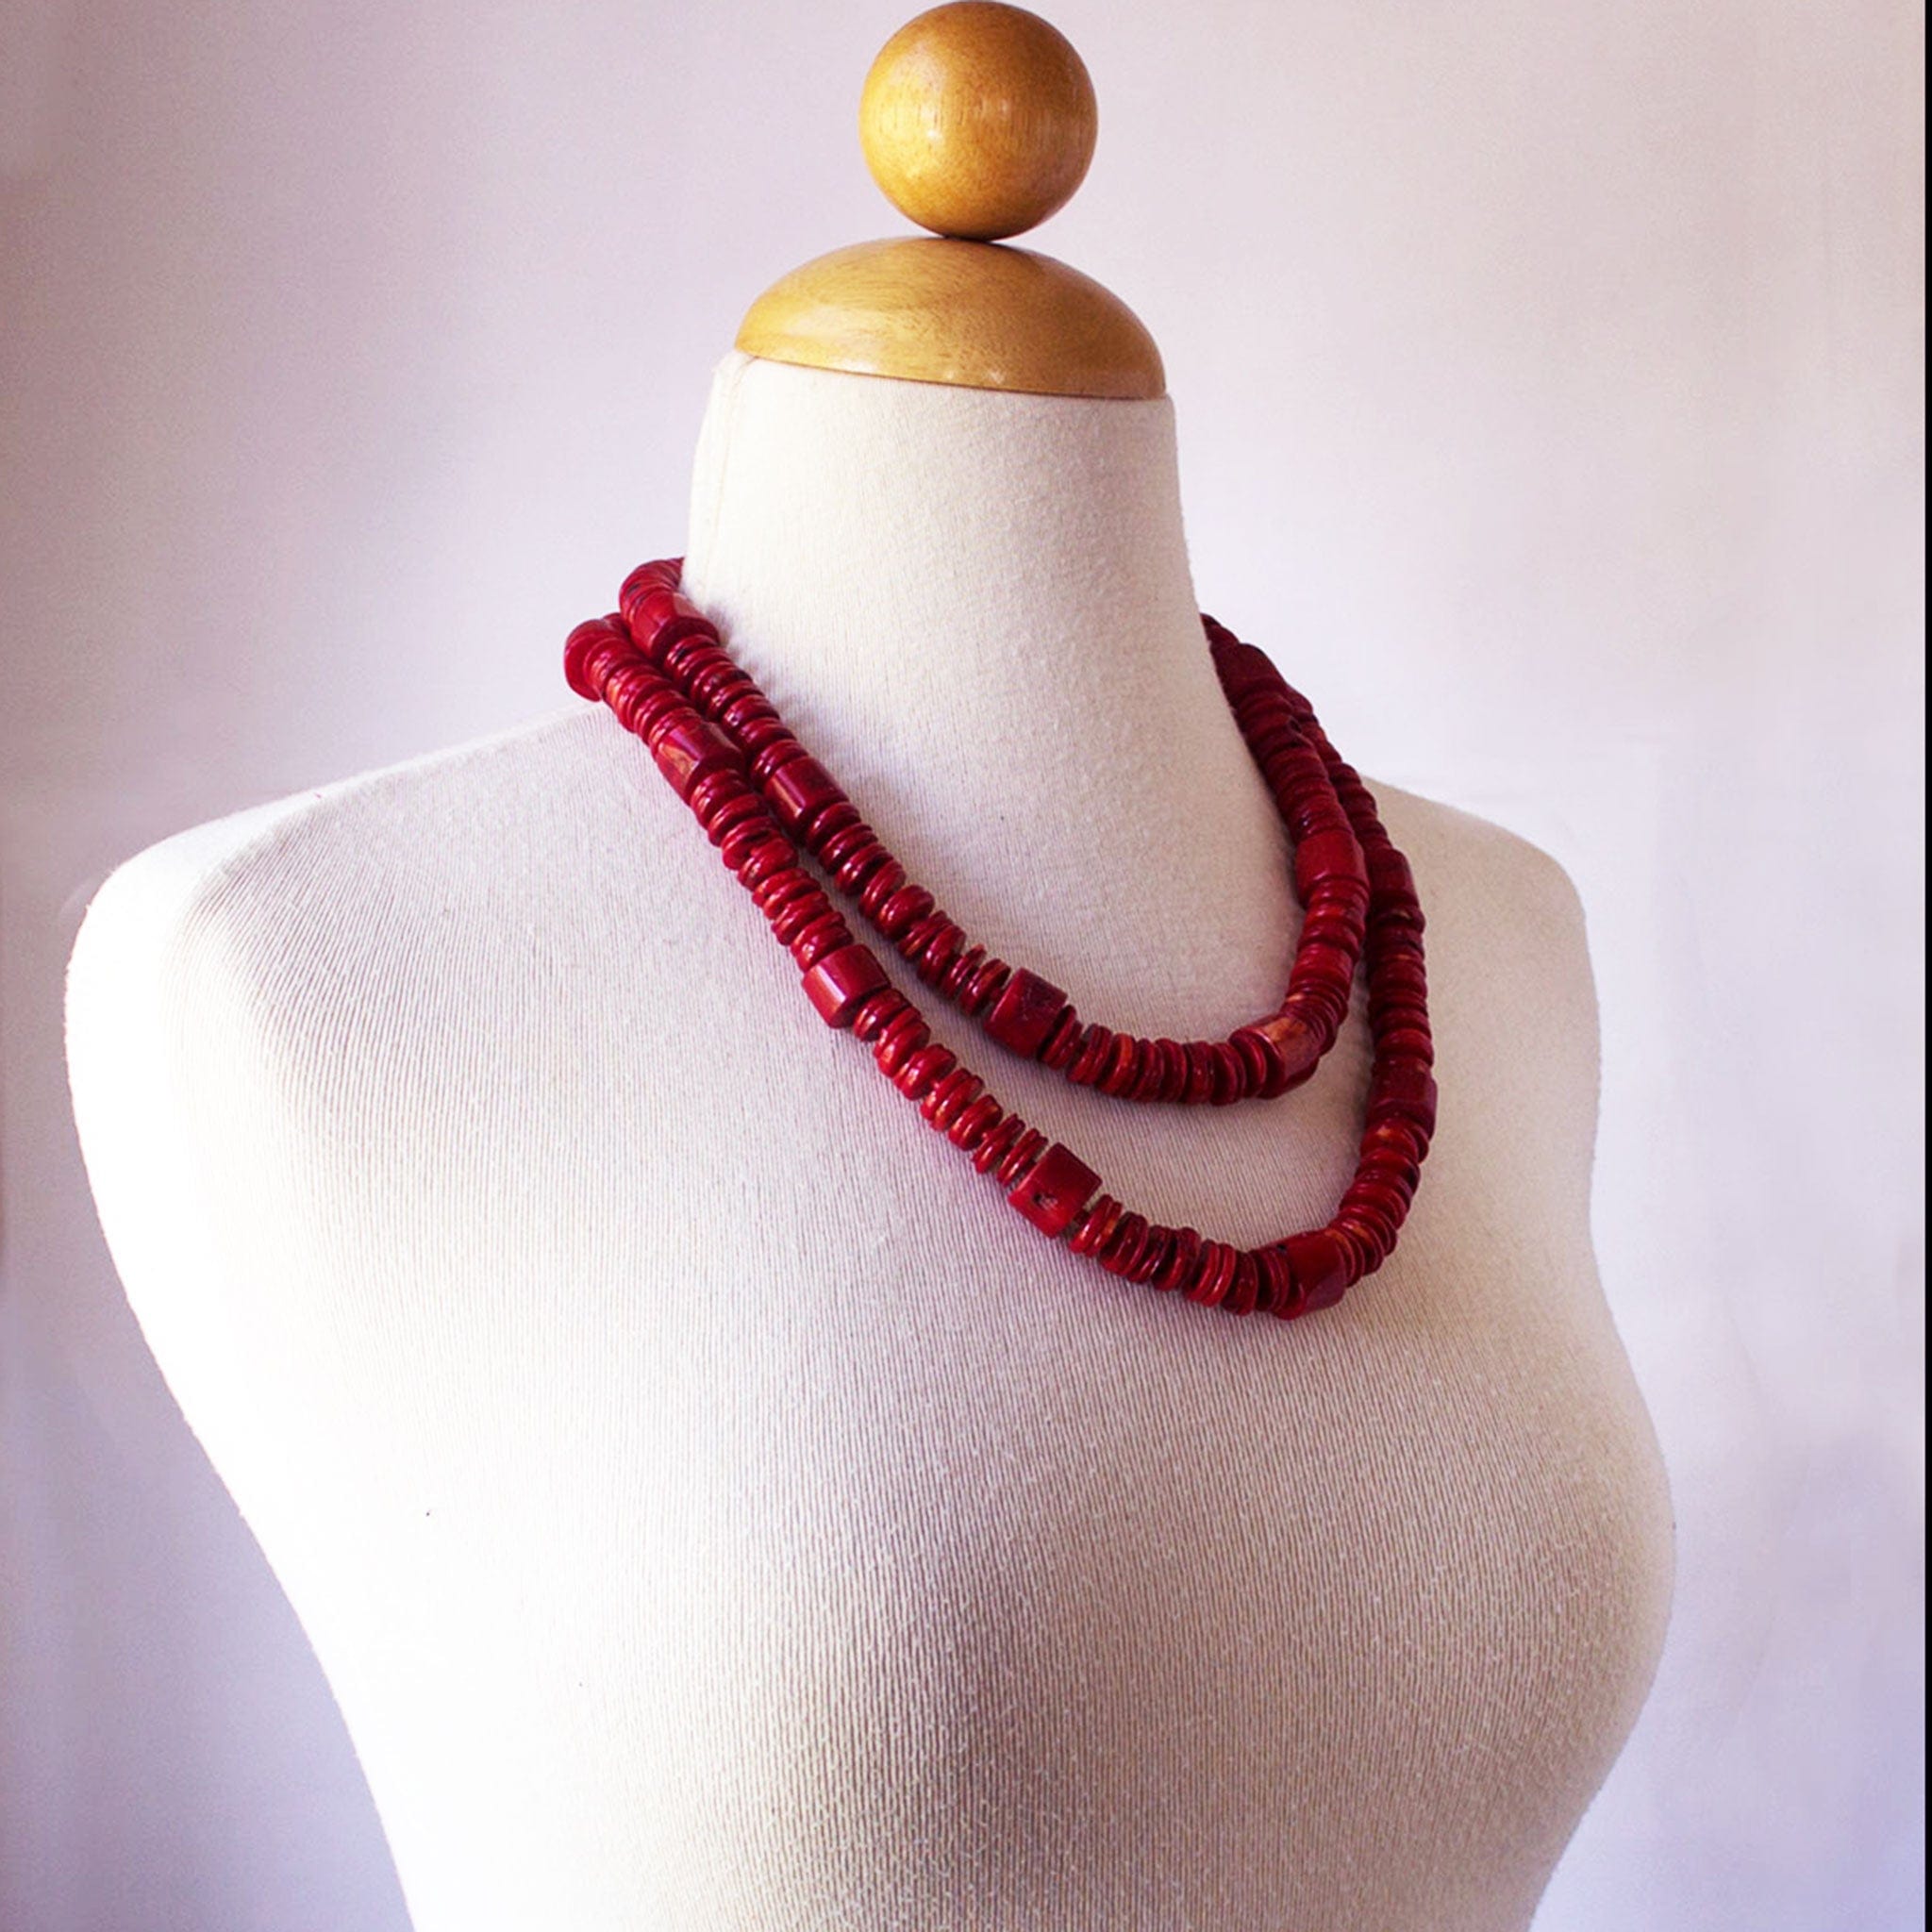 Antique Coral Necklace - Genuine Red Coral & 835 Silver Necklace 20 Inch -  Graduated Mediterranean CoralBead Necklace - Antique Jewellery | Coral  necklace, Necklace, Red coral necklace